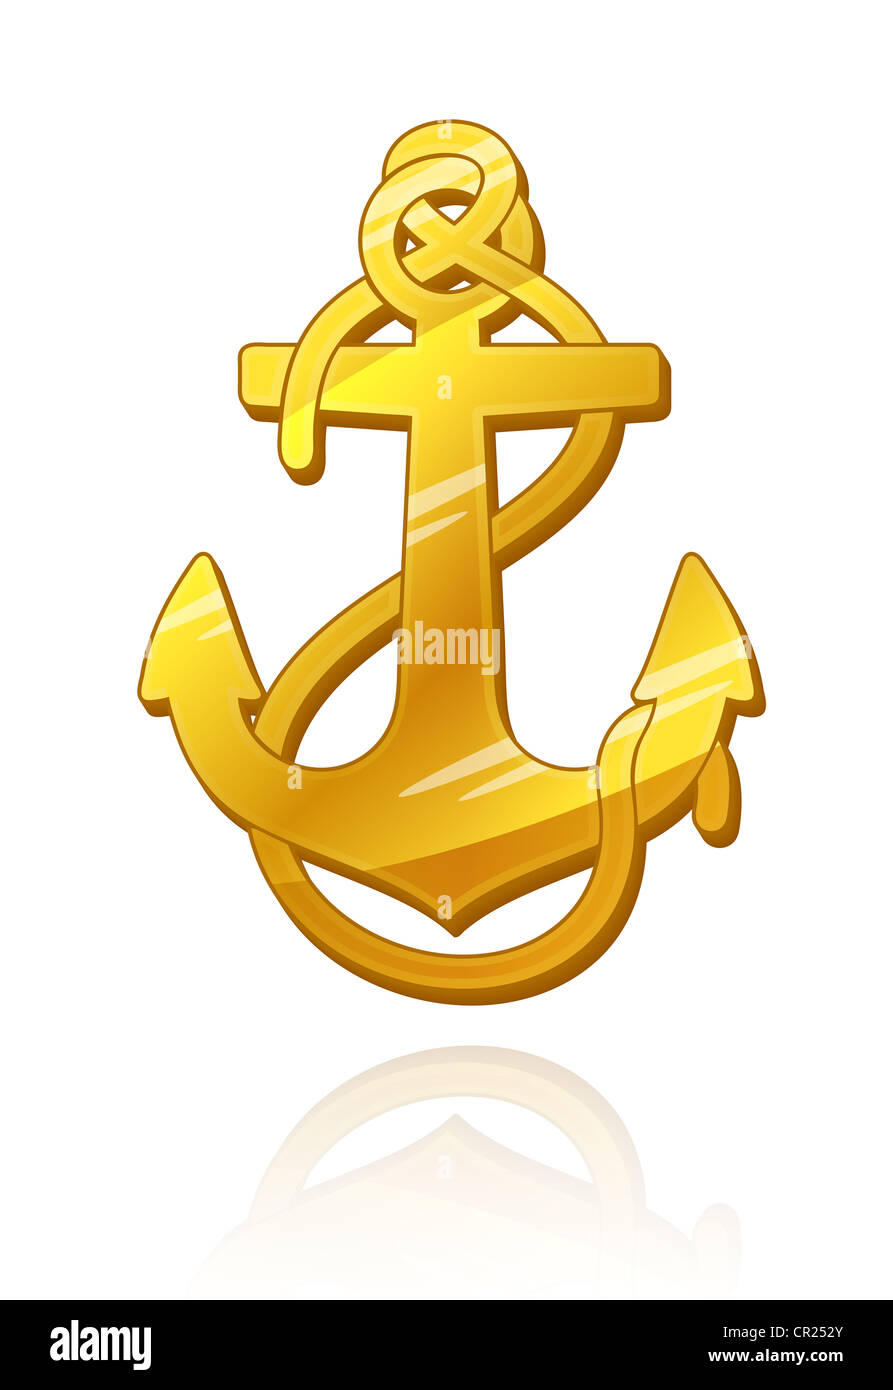 Gold Anchor. Vector illustration. Stock Photo